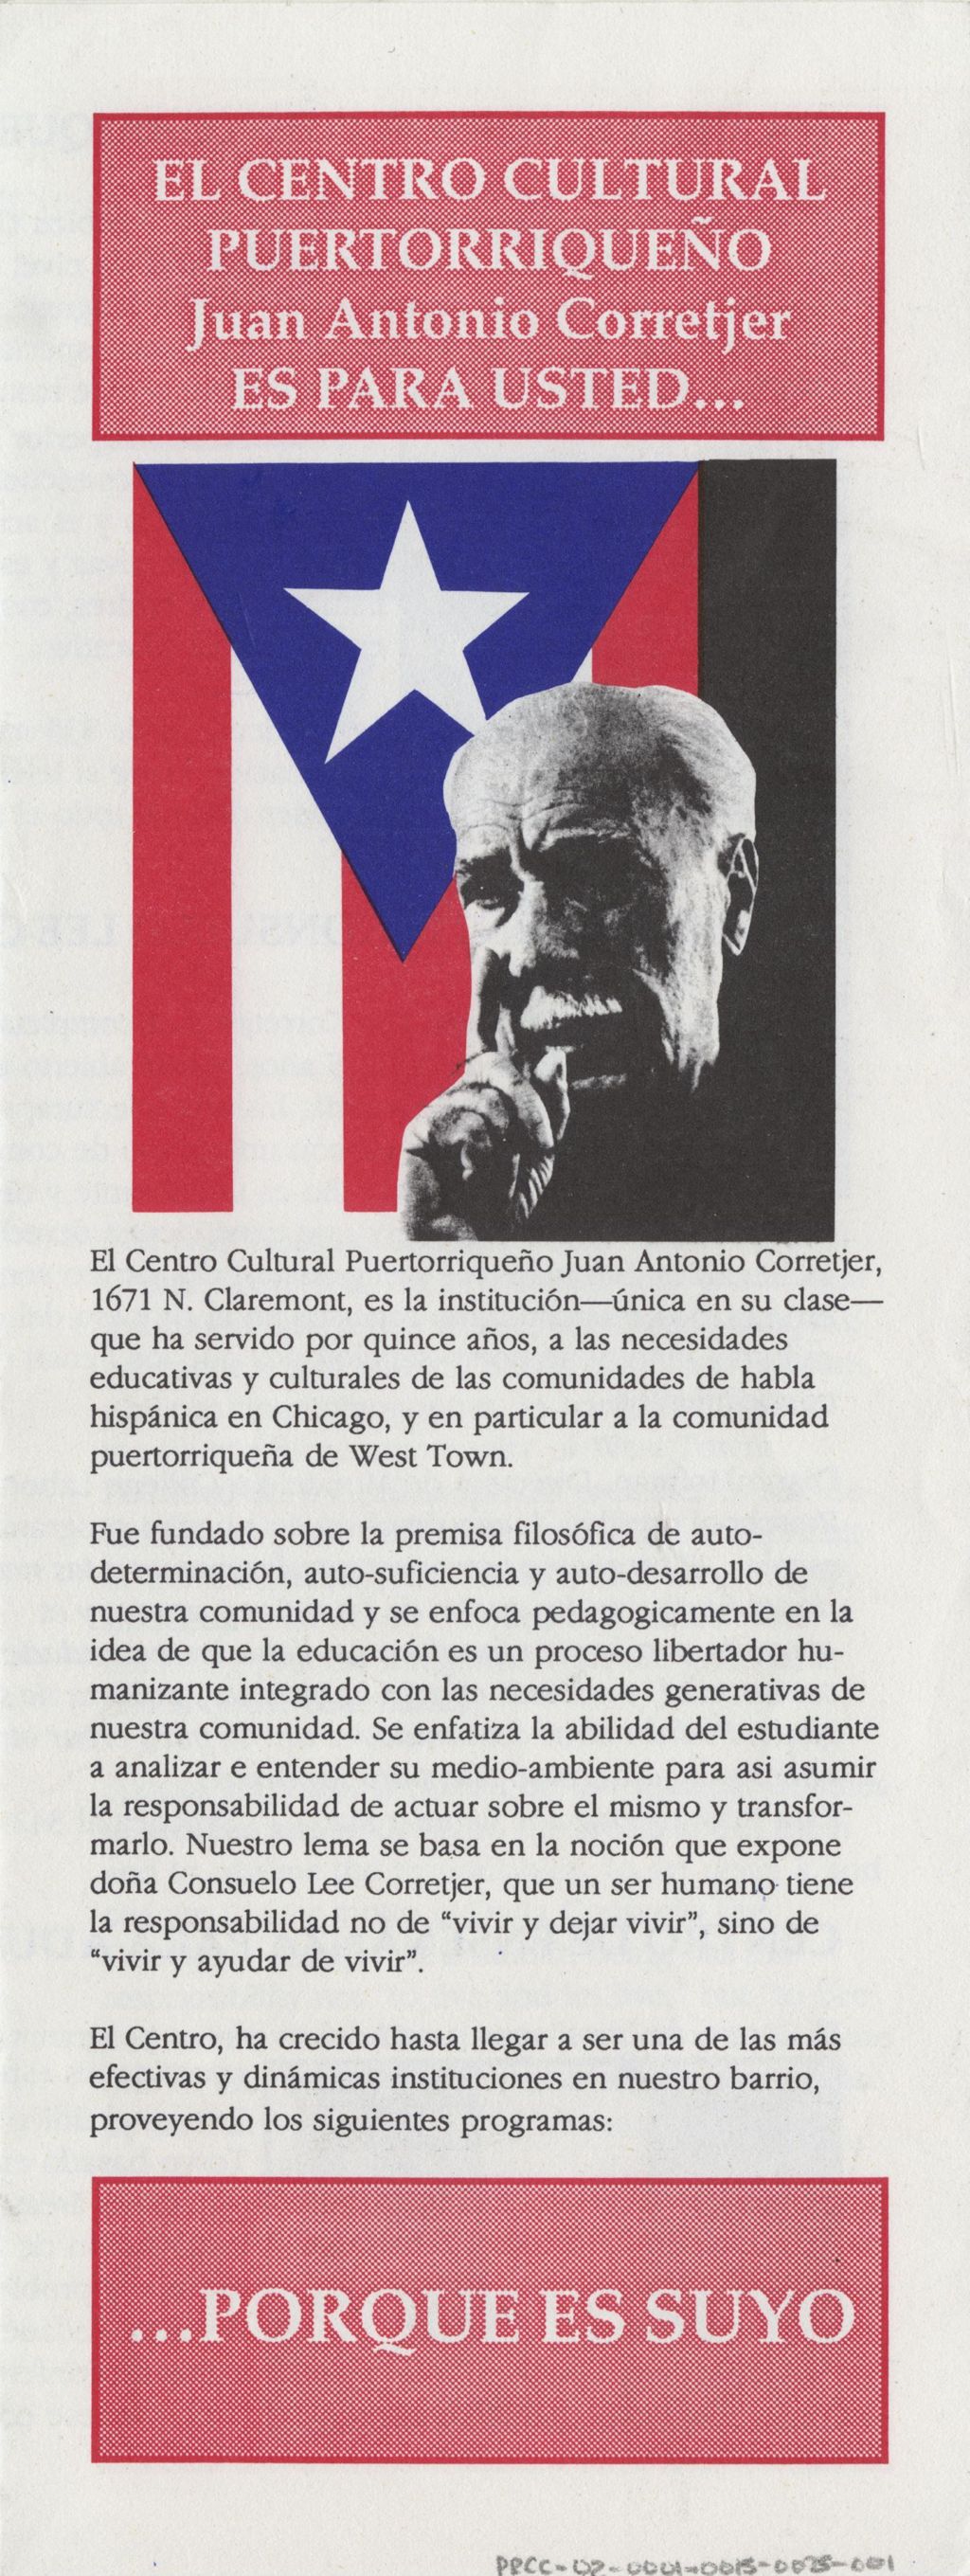 Miniature of El Centro Cultural Puertorriqueno Juan Antonio Corretjer es Para Usted...